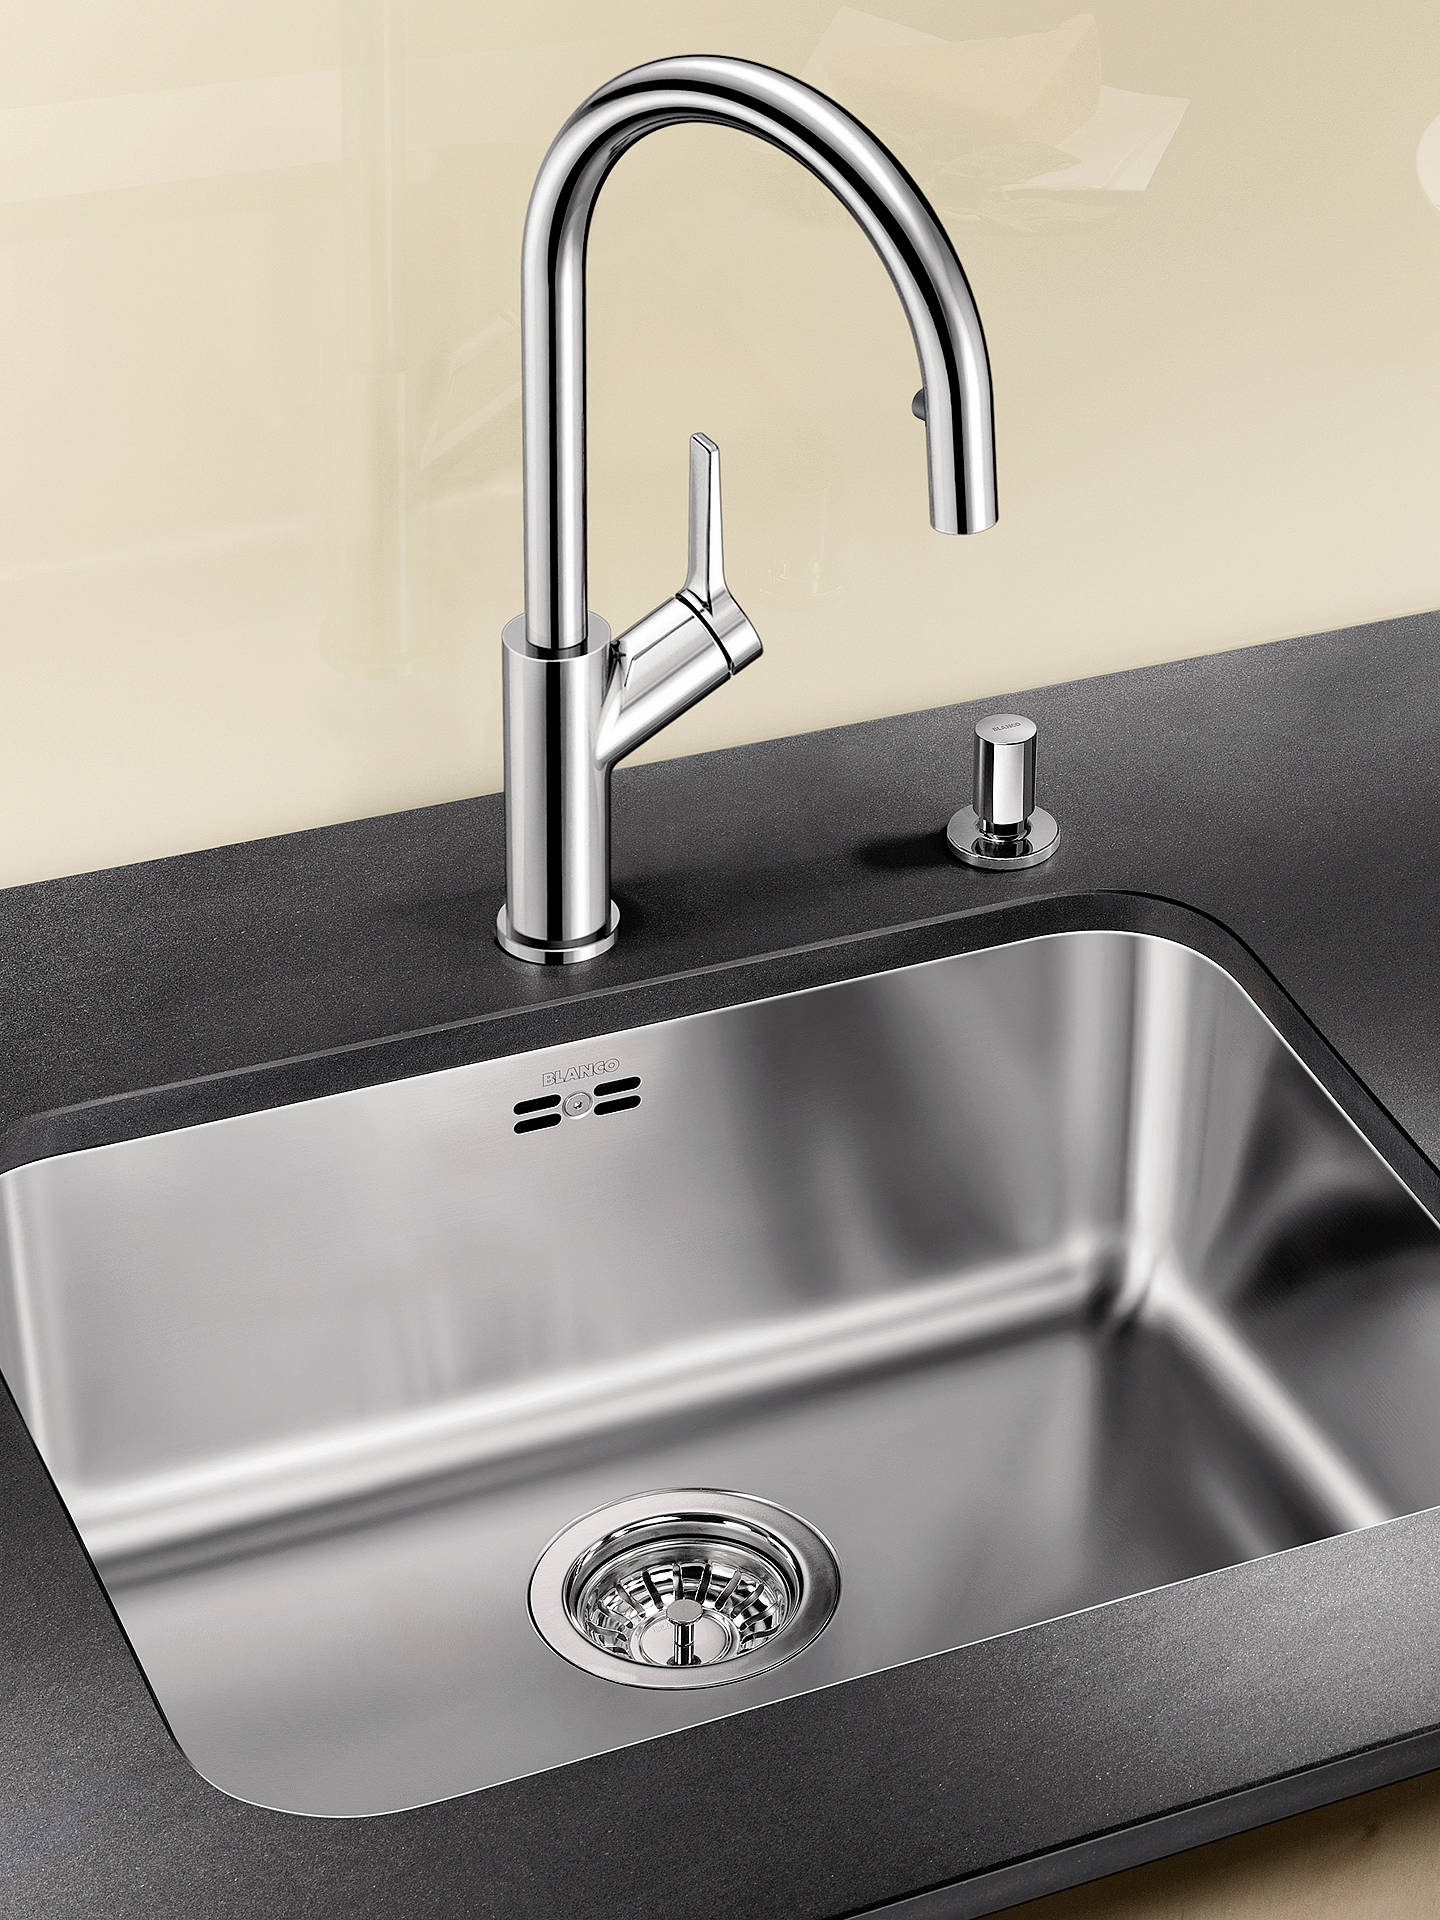 Blanco Supra 500 U Single Bowl Undermounted Kitchen Sink Stainless Steel